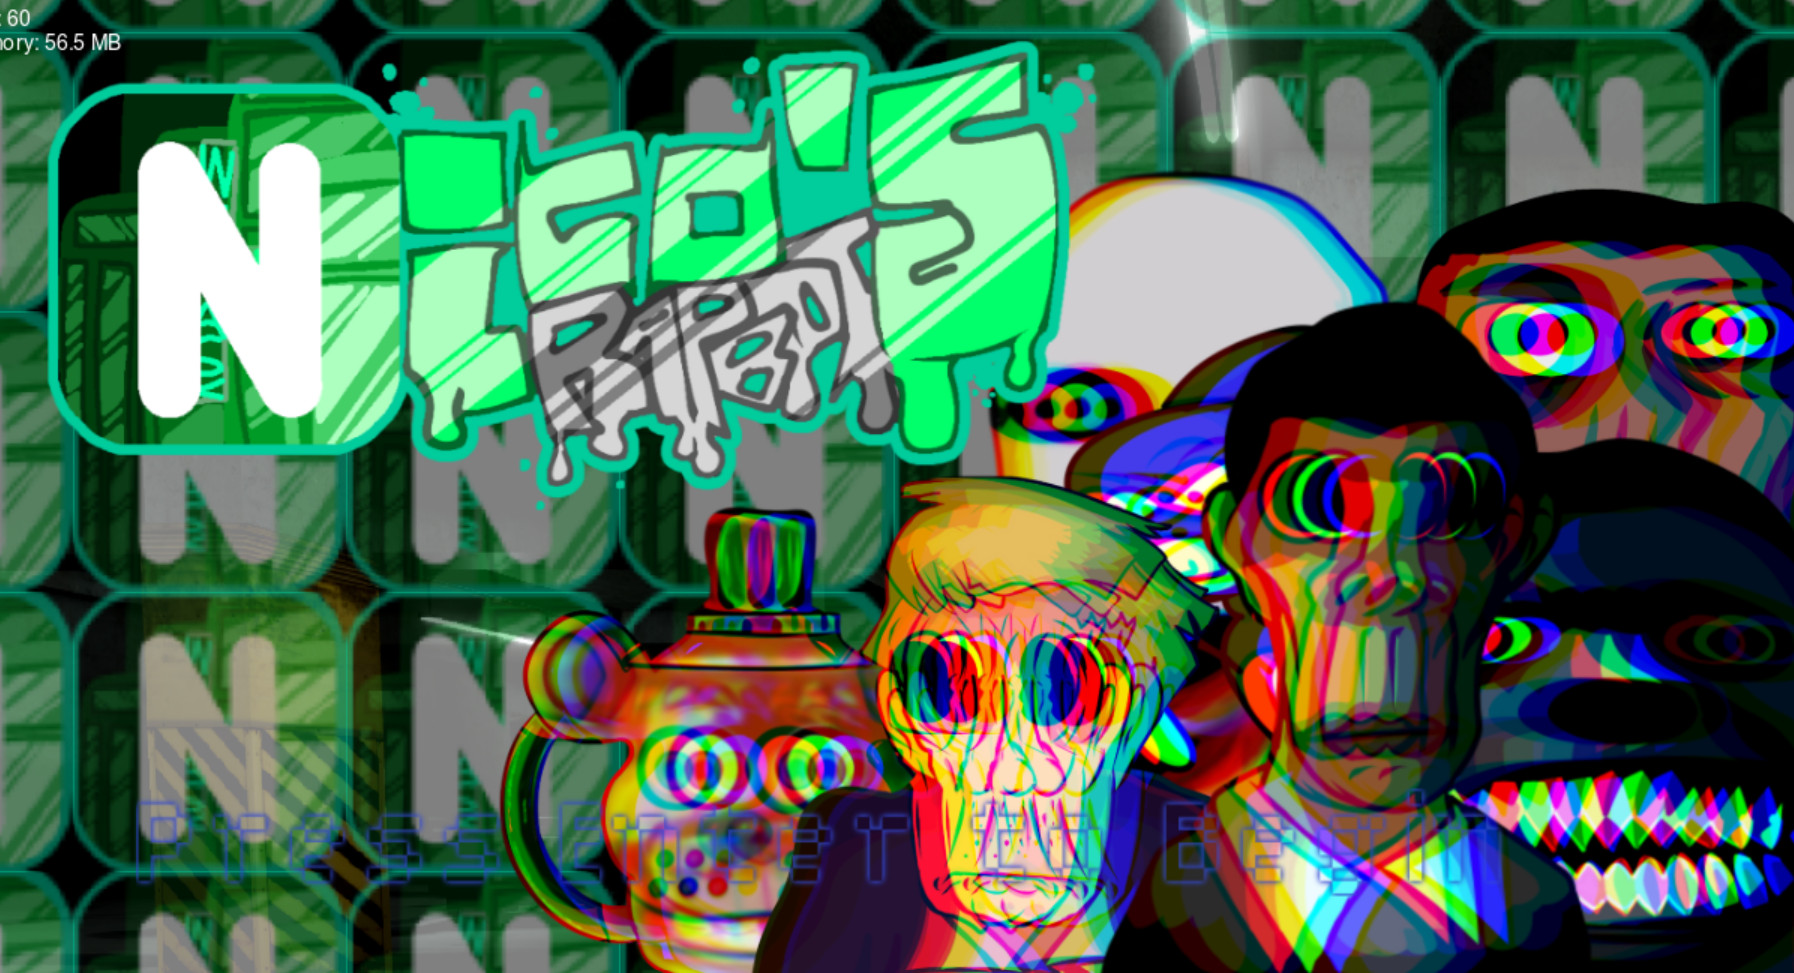 Friday Night Funkin' VS Nico's Bots Nextbots (FNF Mod/HARD) 